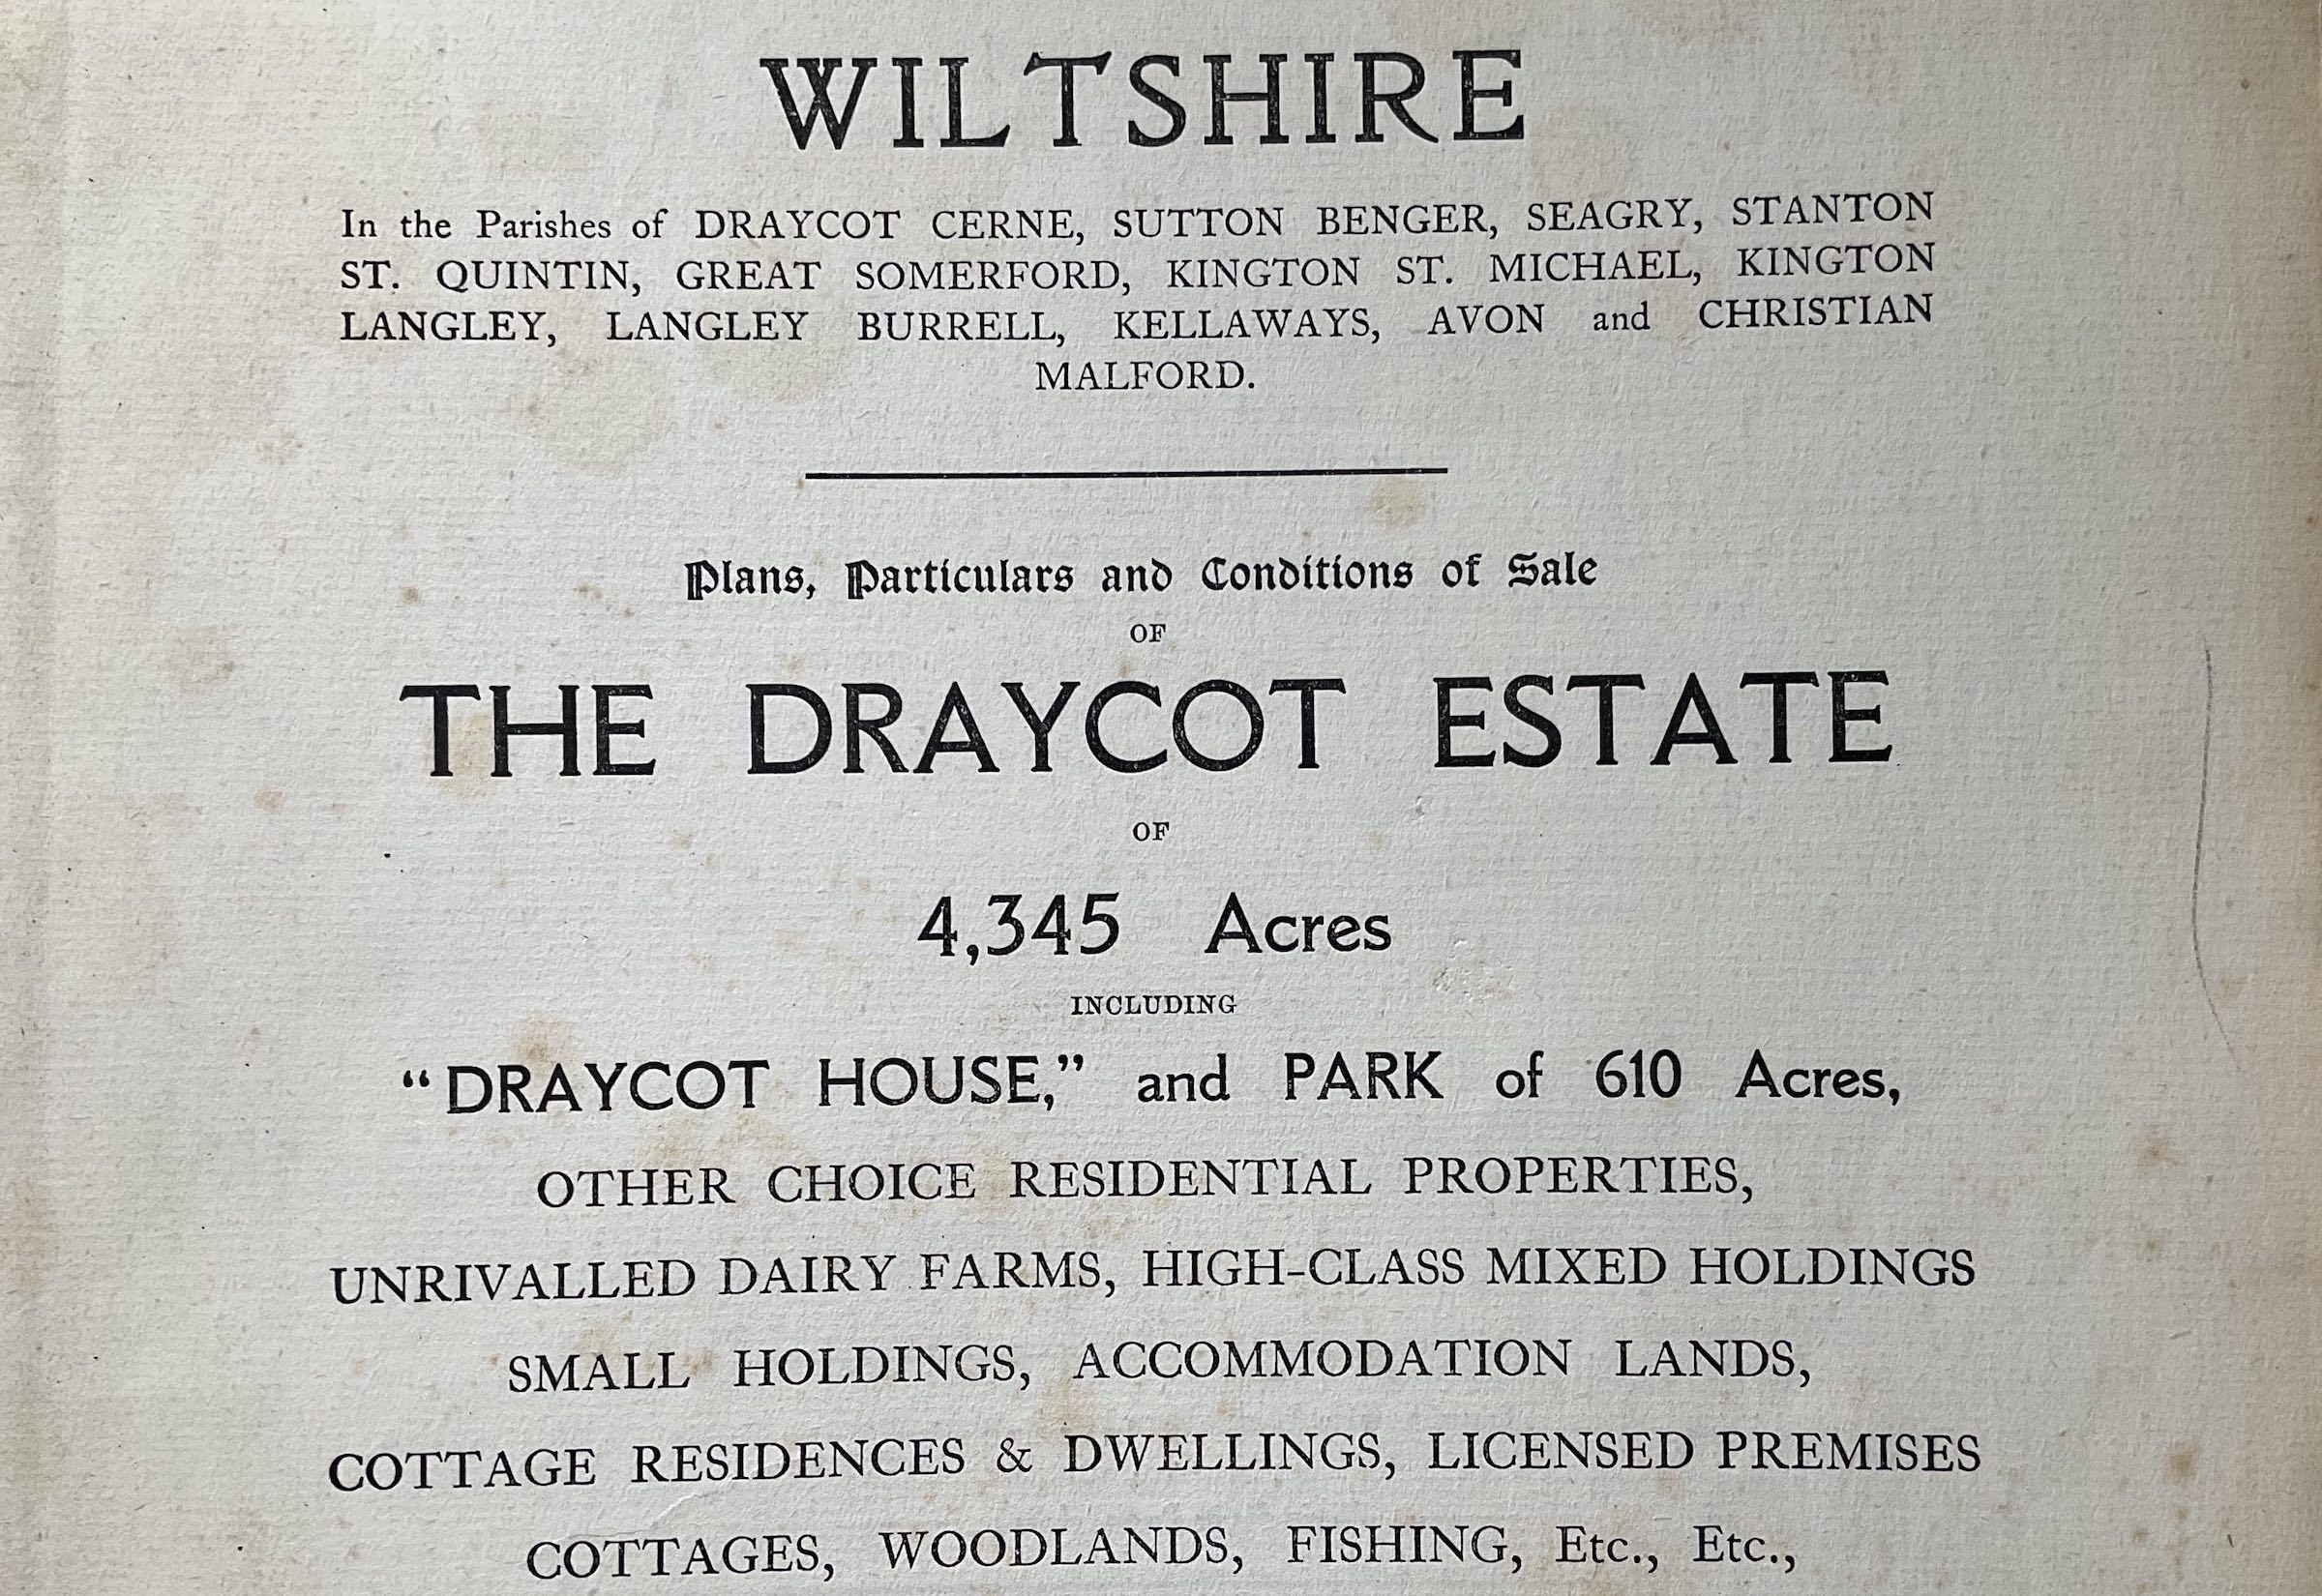 The Draycot Estate